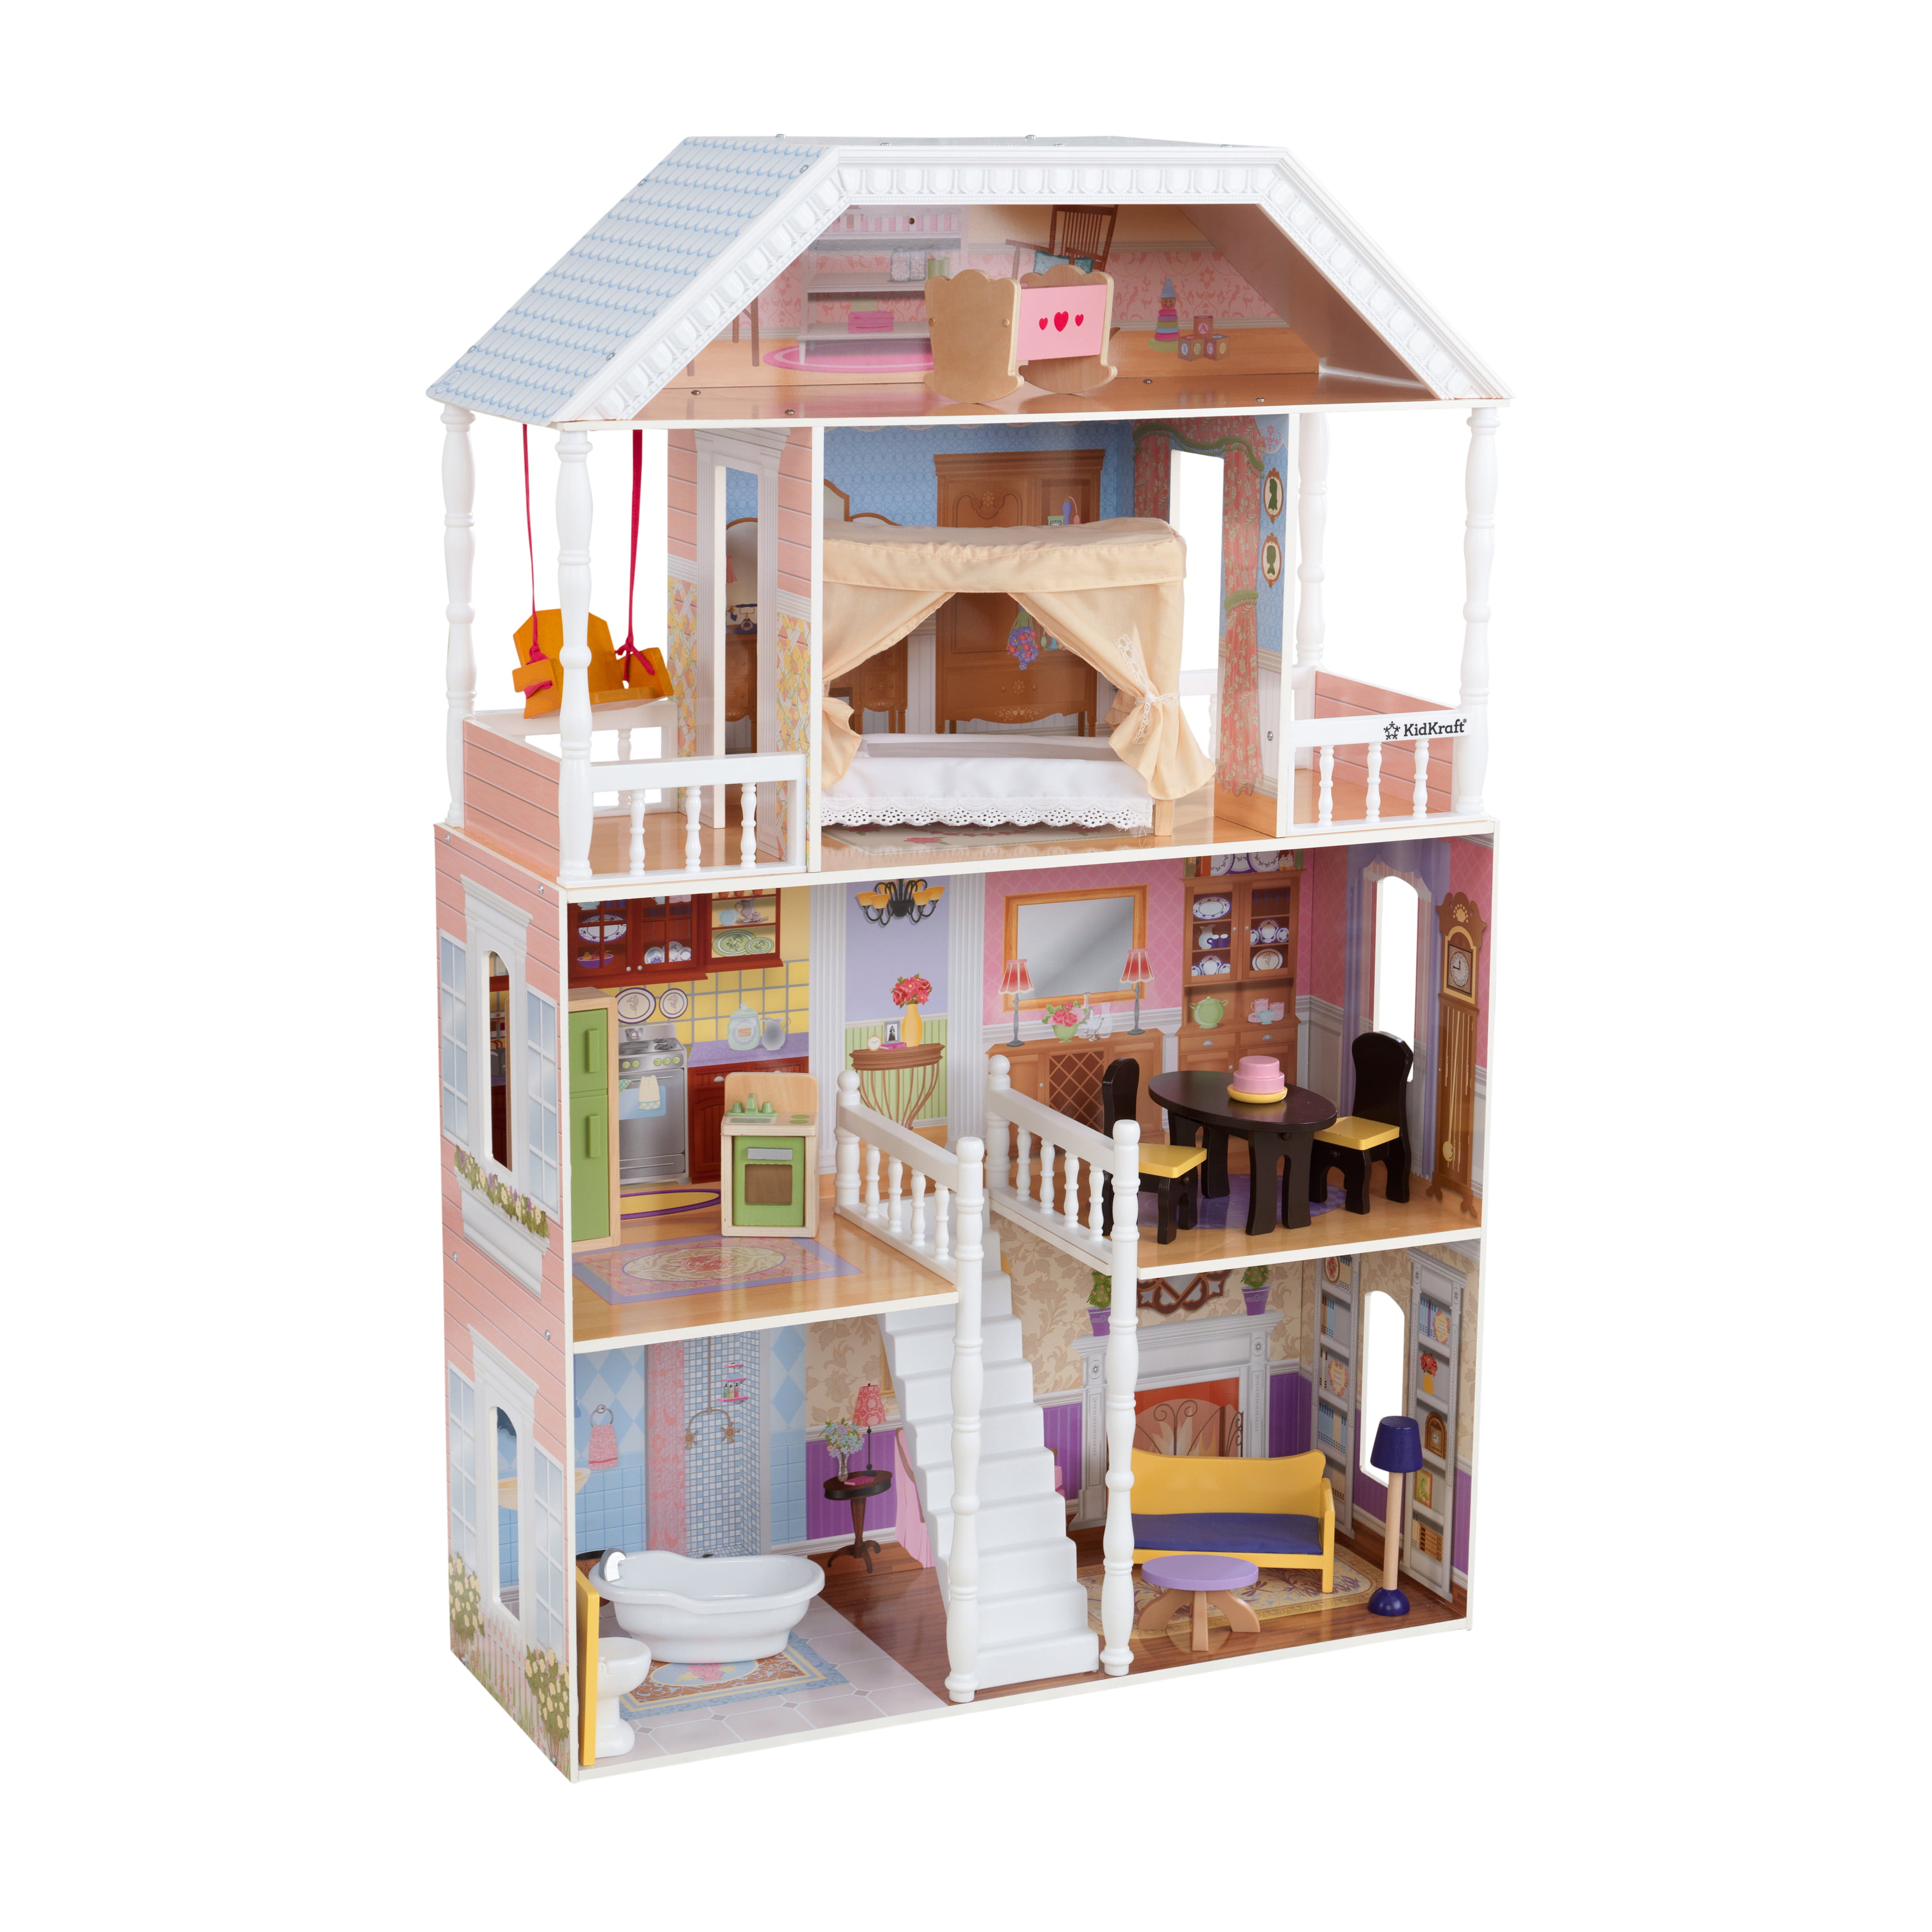 Kidkraft Savannah Dollhouse With 14 Accessories Included Walmart